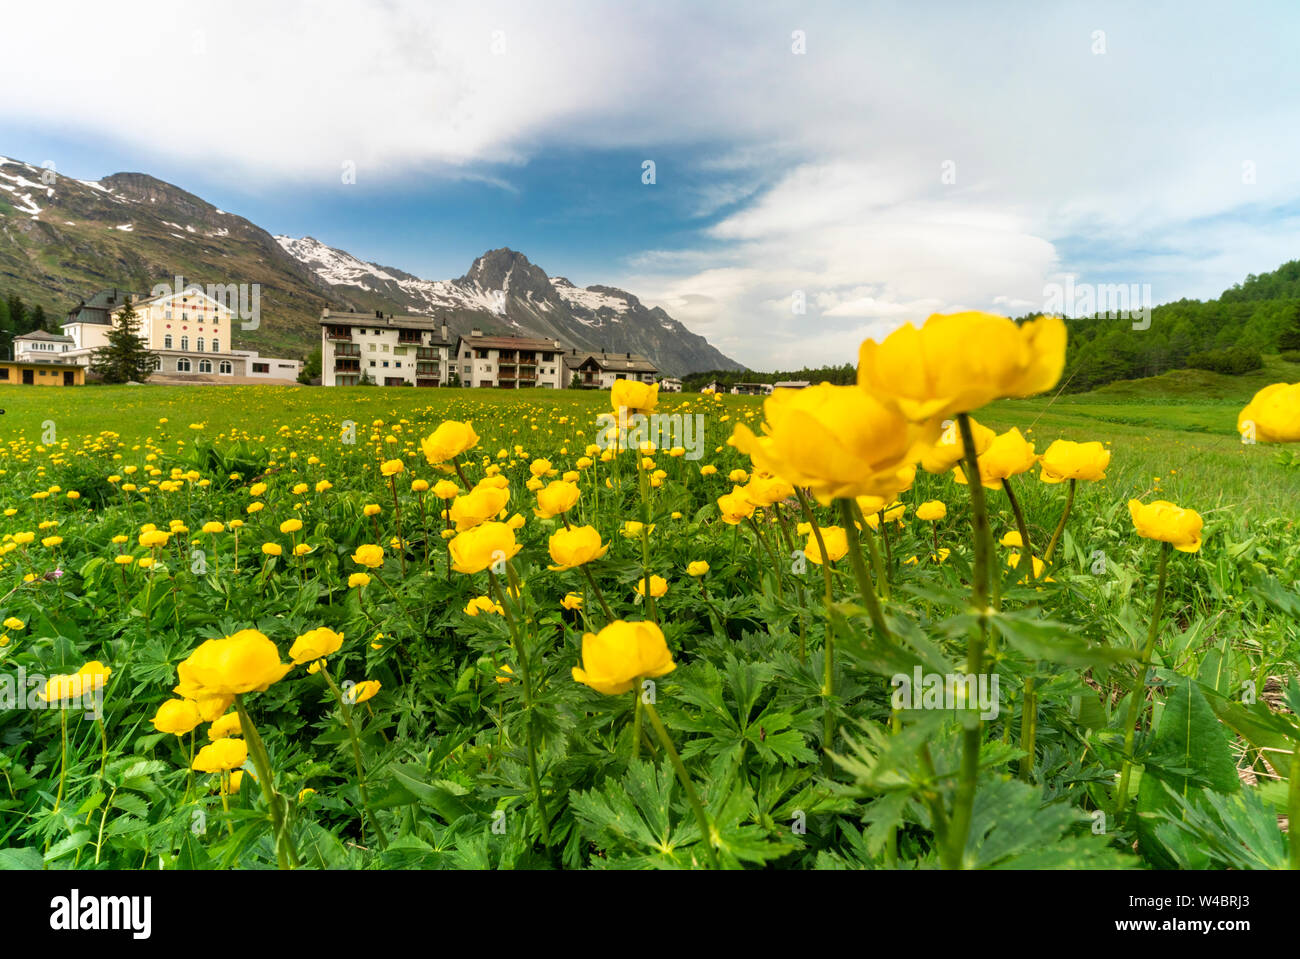 Alpine village surrounded by fields of buttercup flowers in bloom, Maloja Pass, Engadin, canton of Graubunden, Switzerland Stock Photo